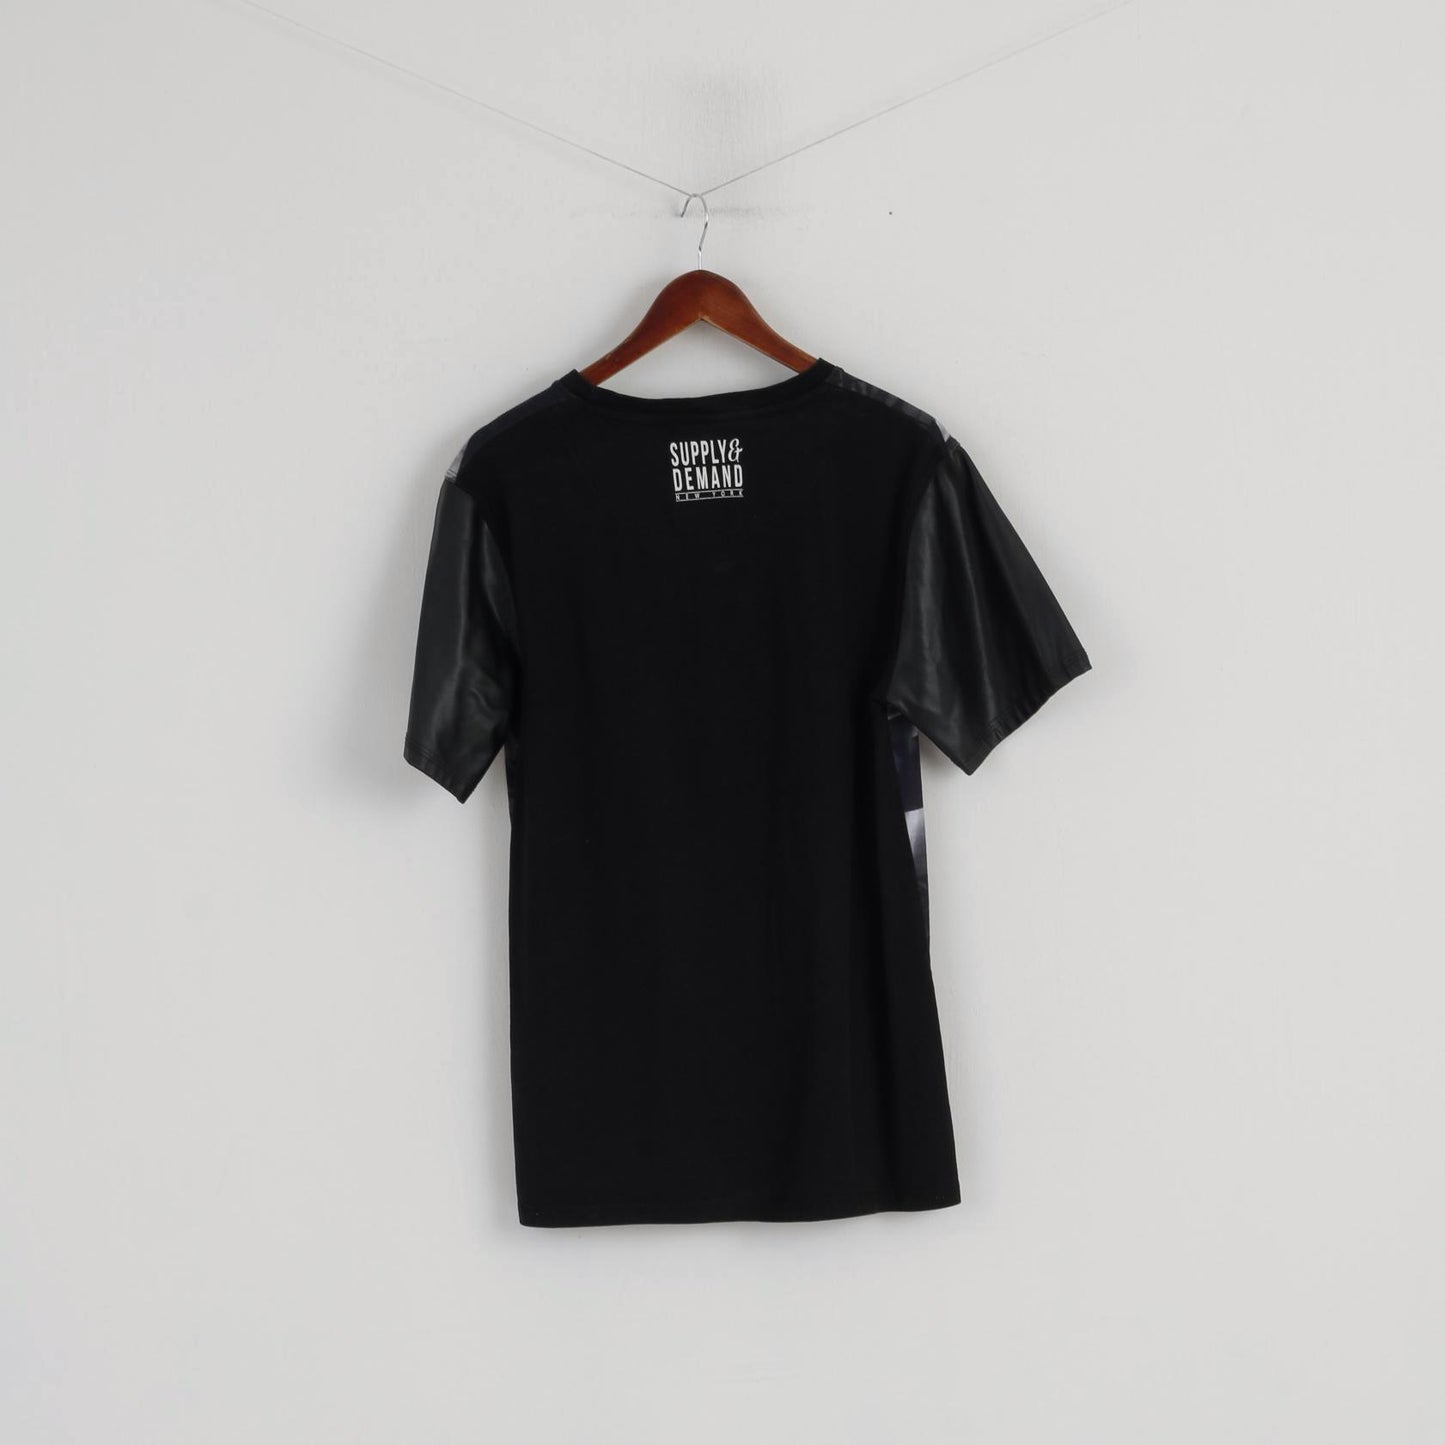 Supply & Demand Men L (M) Shirt Black Roses New York PVC Short Sleeve Top